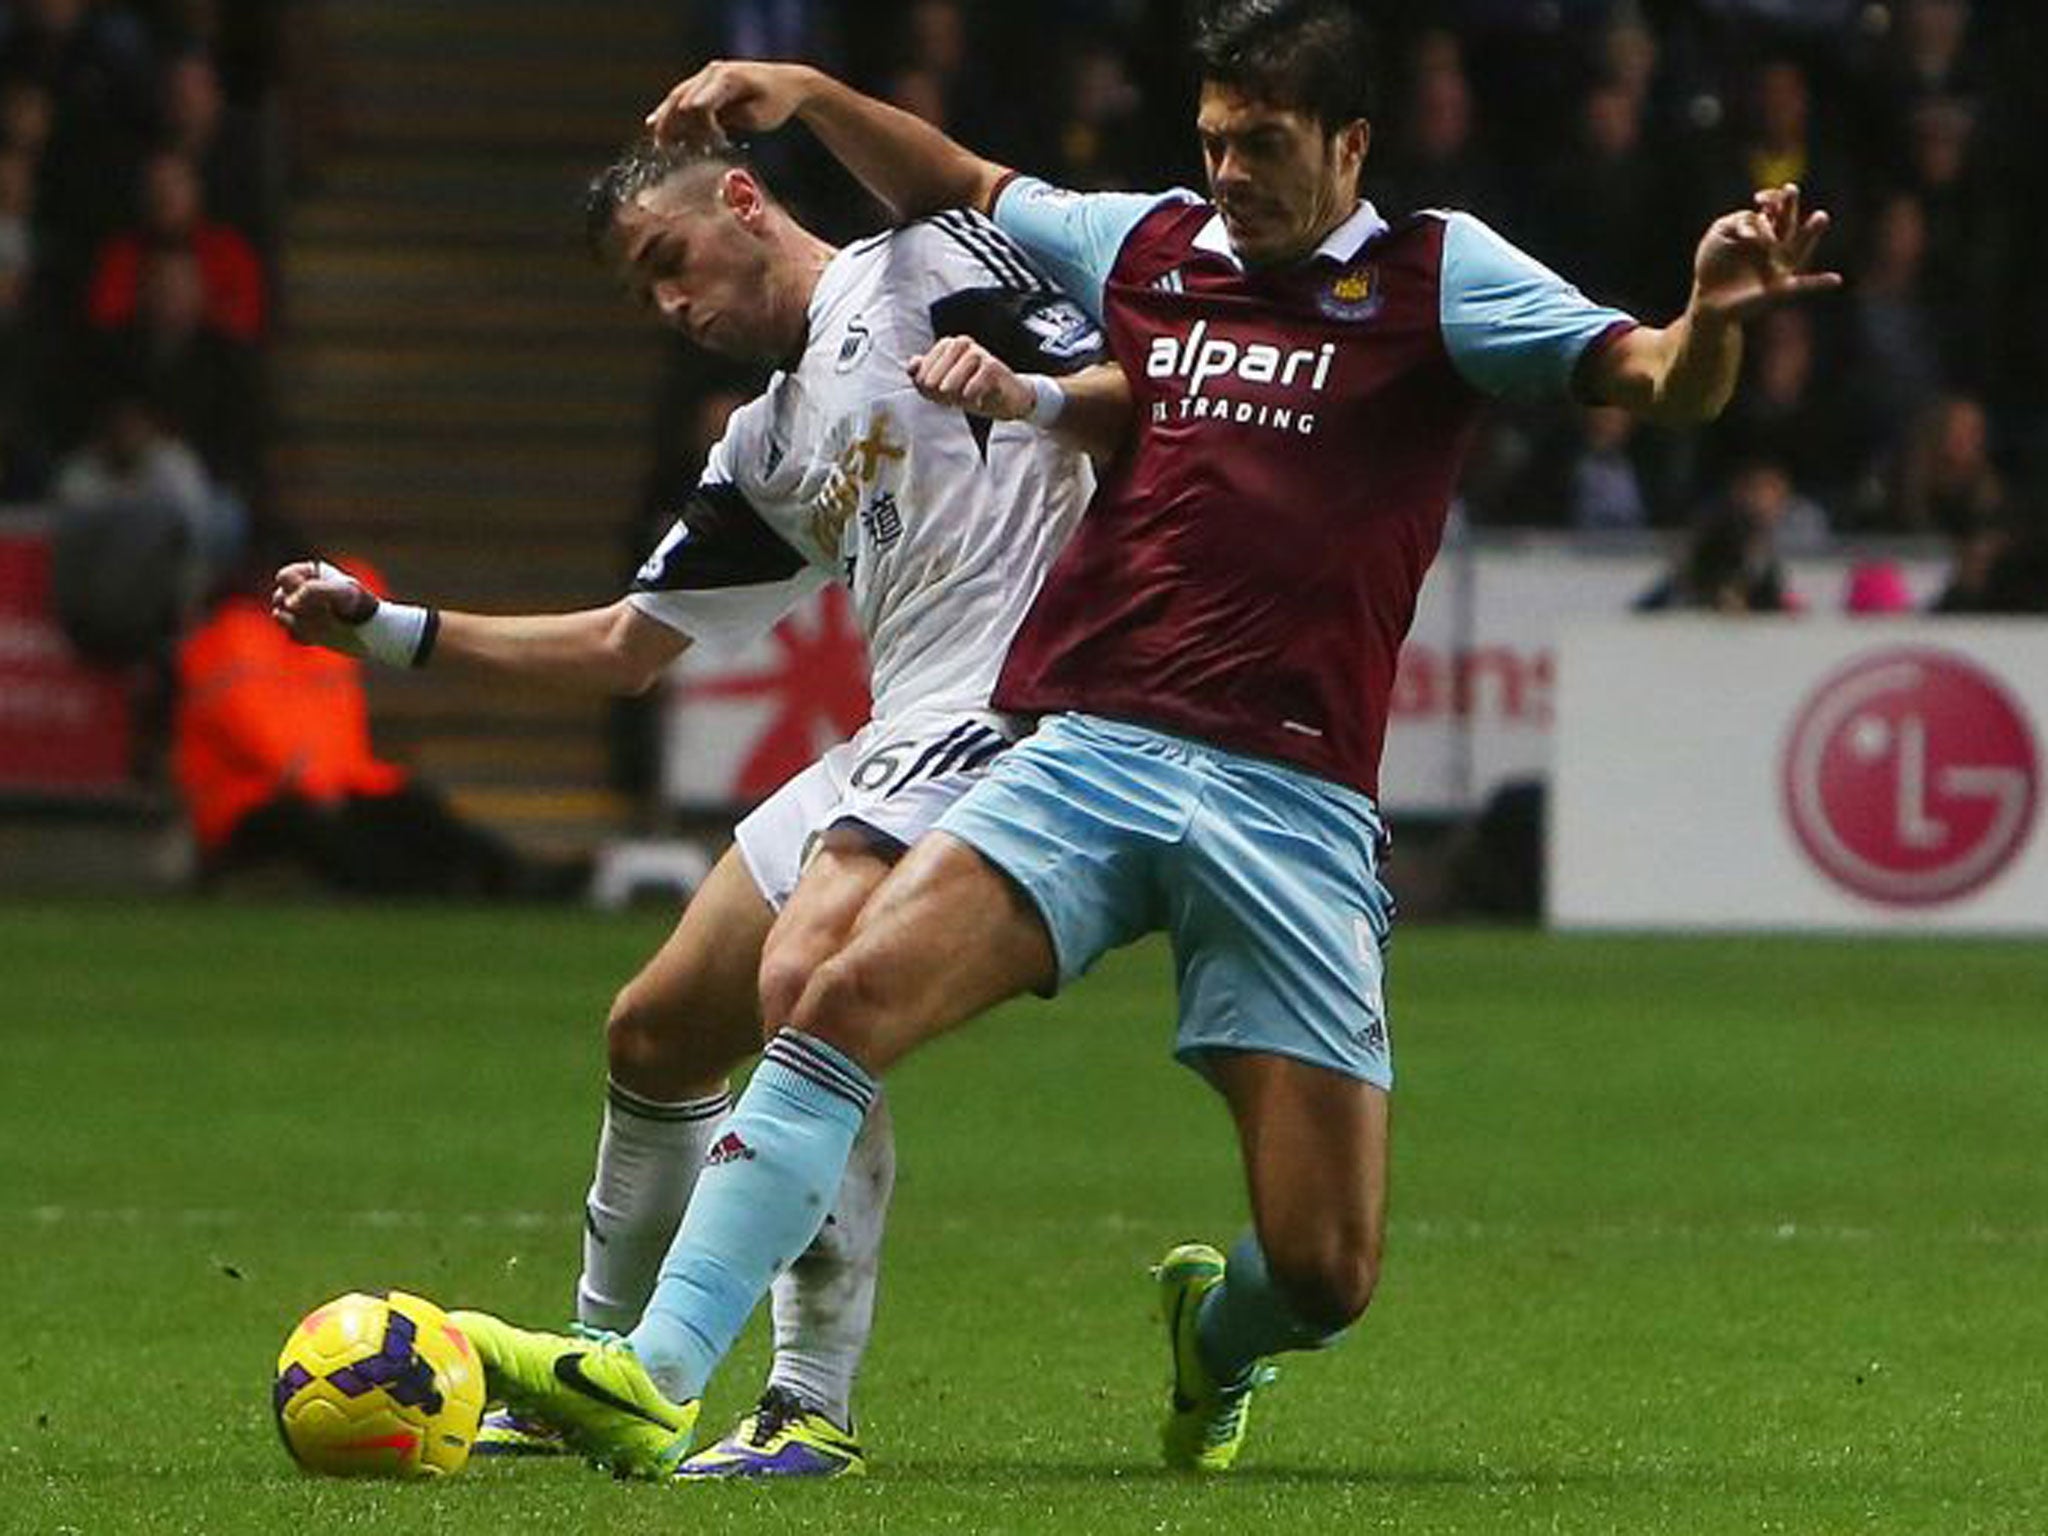 Swansea City's Spanish striker Alvaro Vazquez (left) vies with West Ham defender James Tomkins